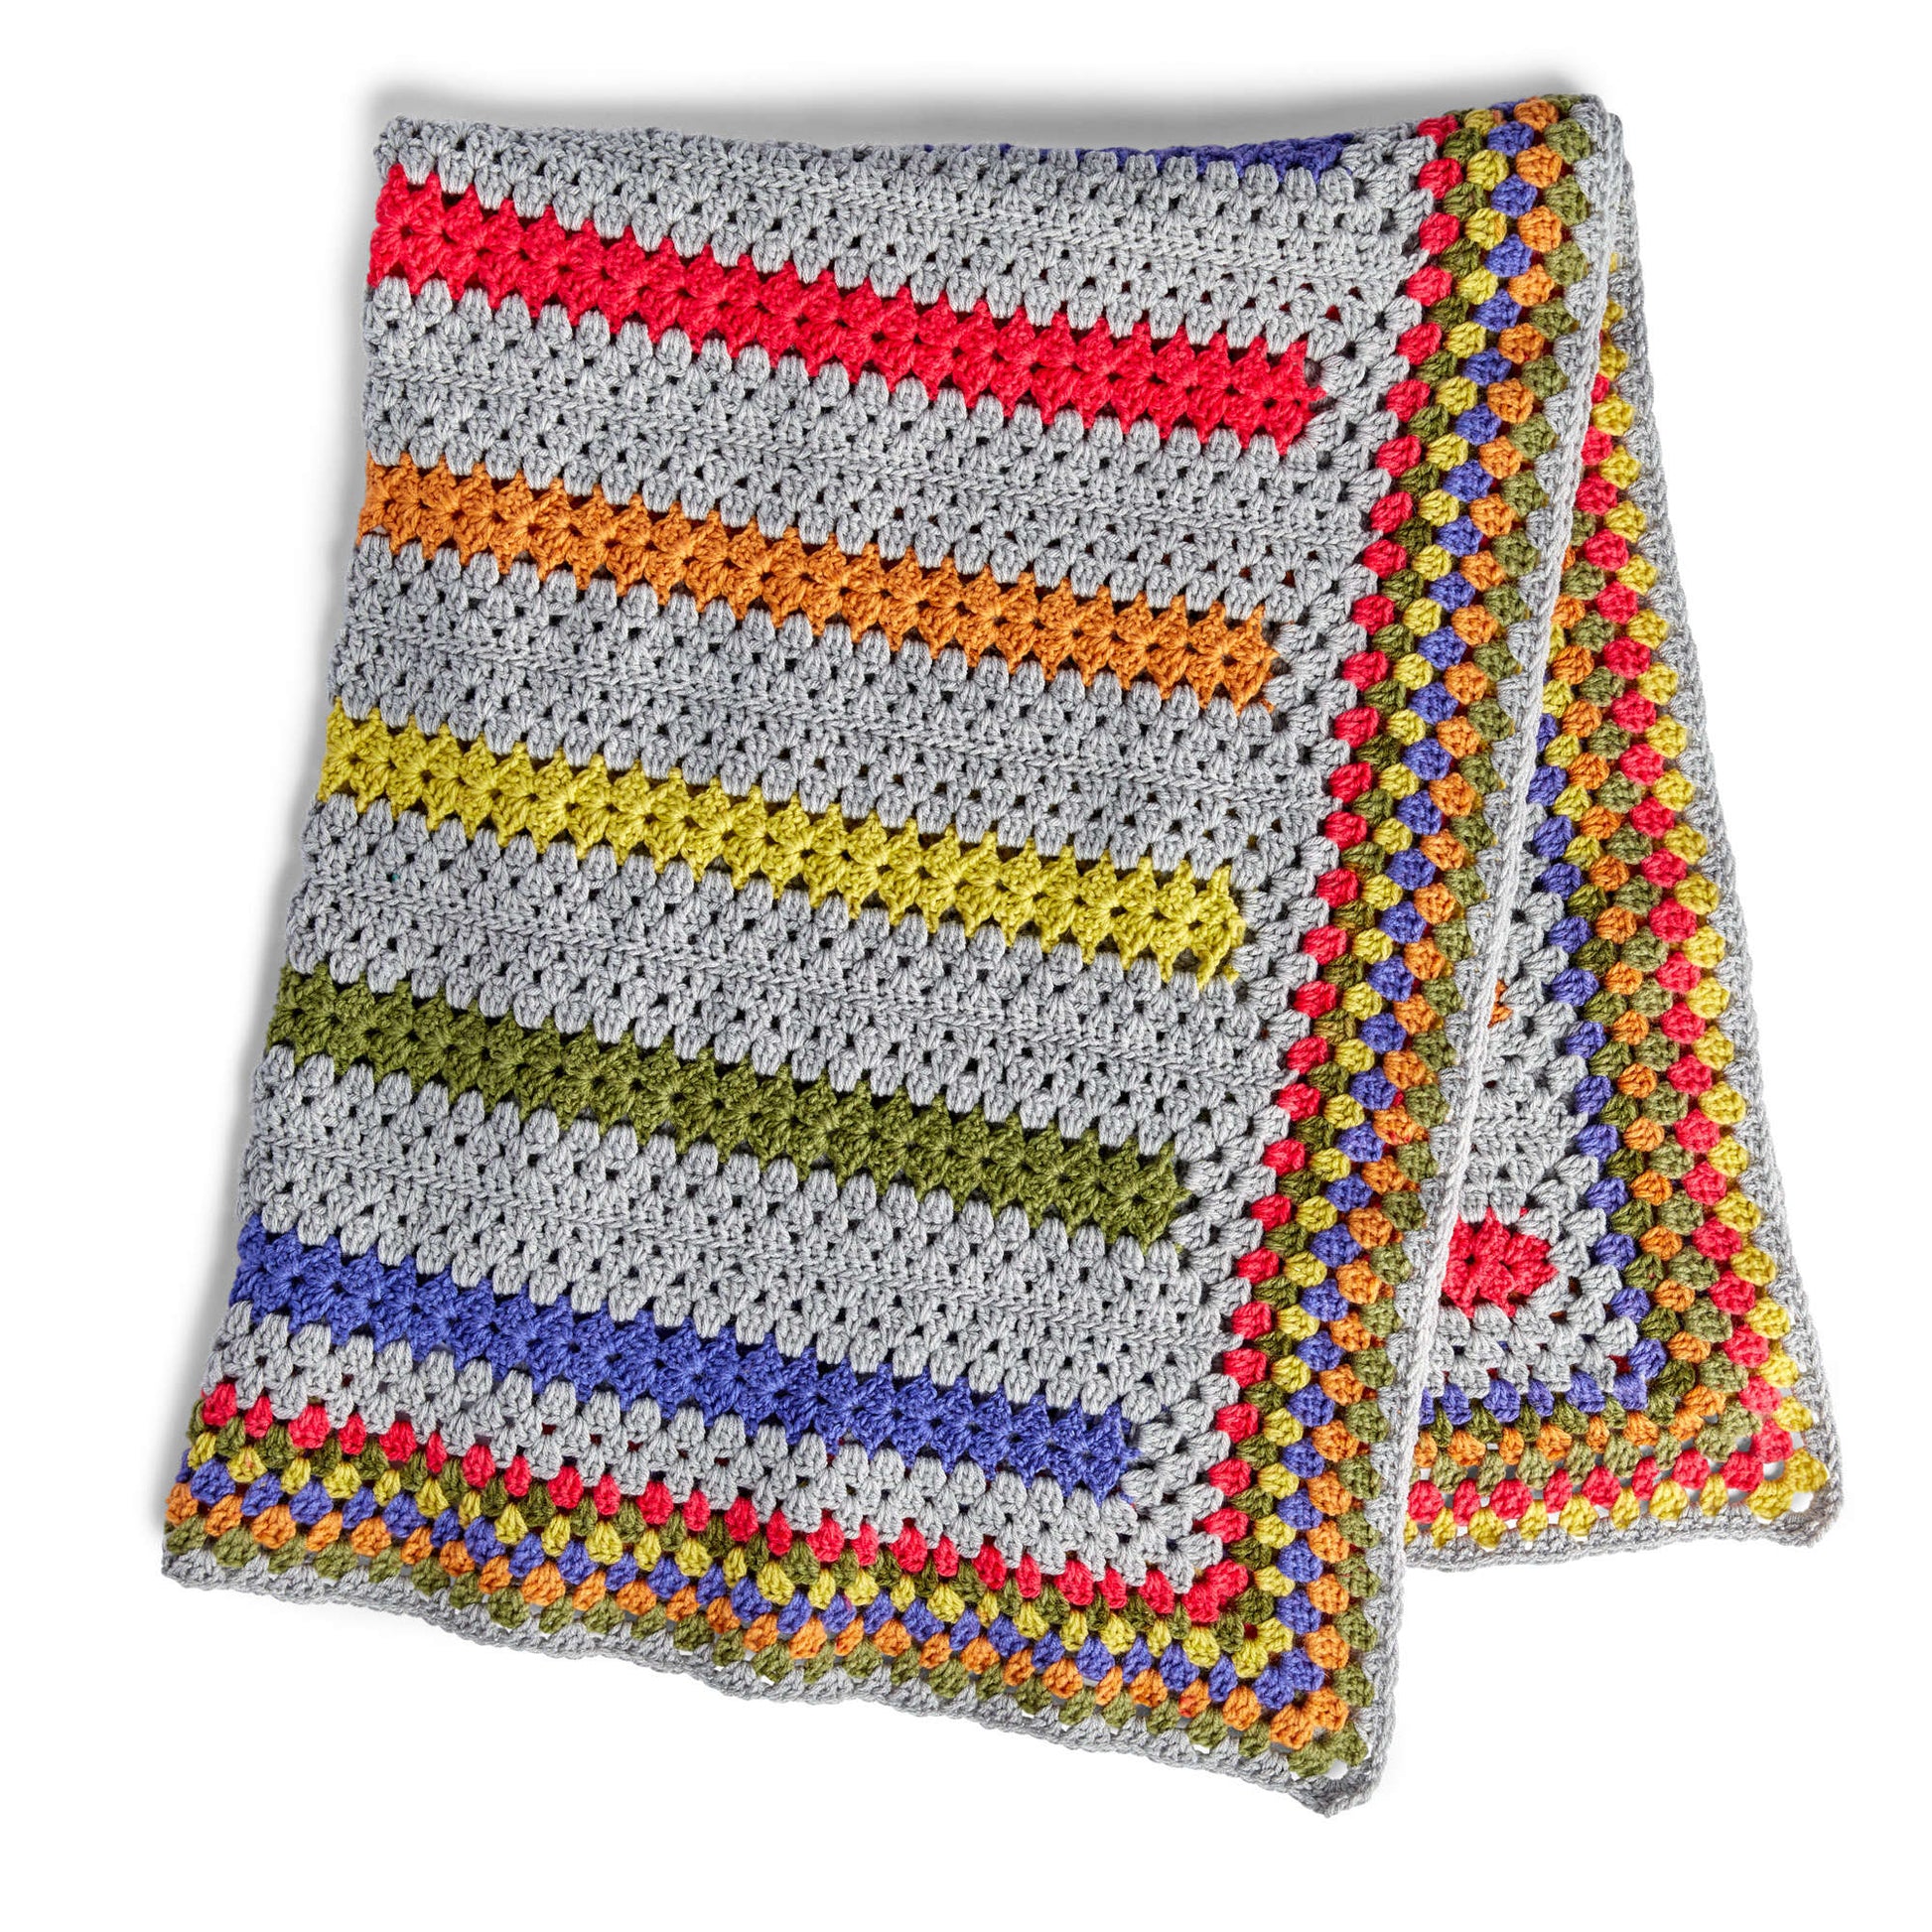 Bernat Pop-A-Minute Crochet Blanket Crochet Blanket made in Bernat Super Value yarn